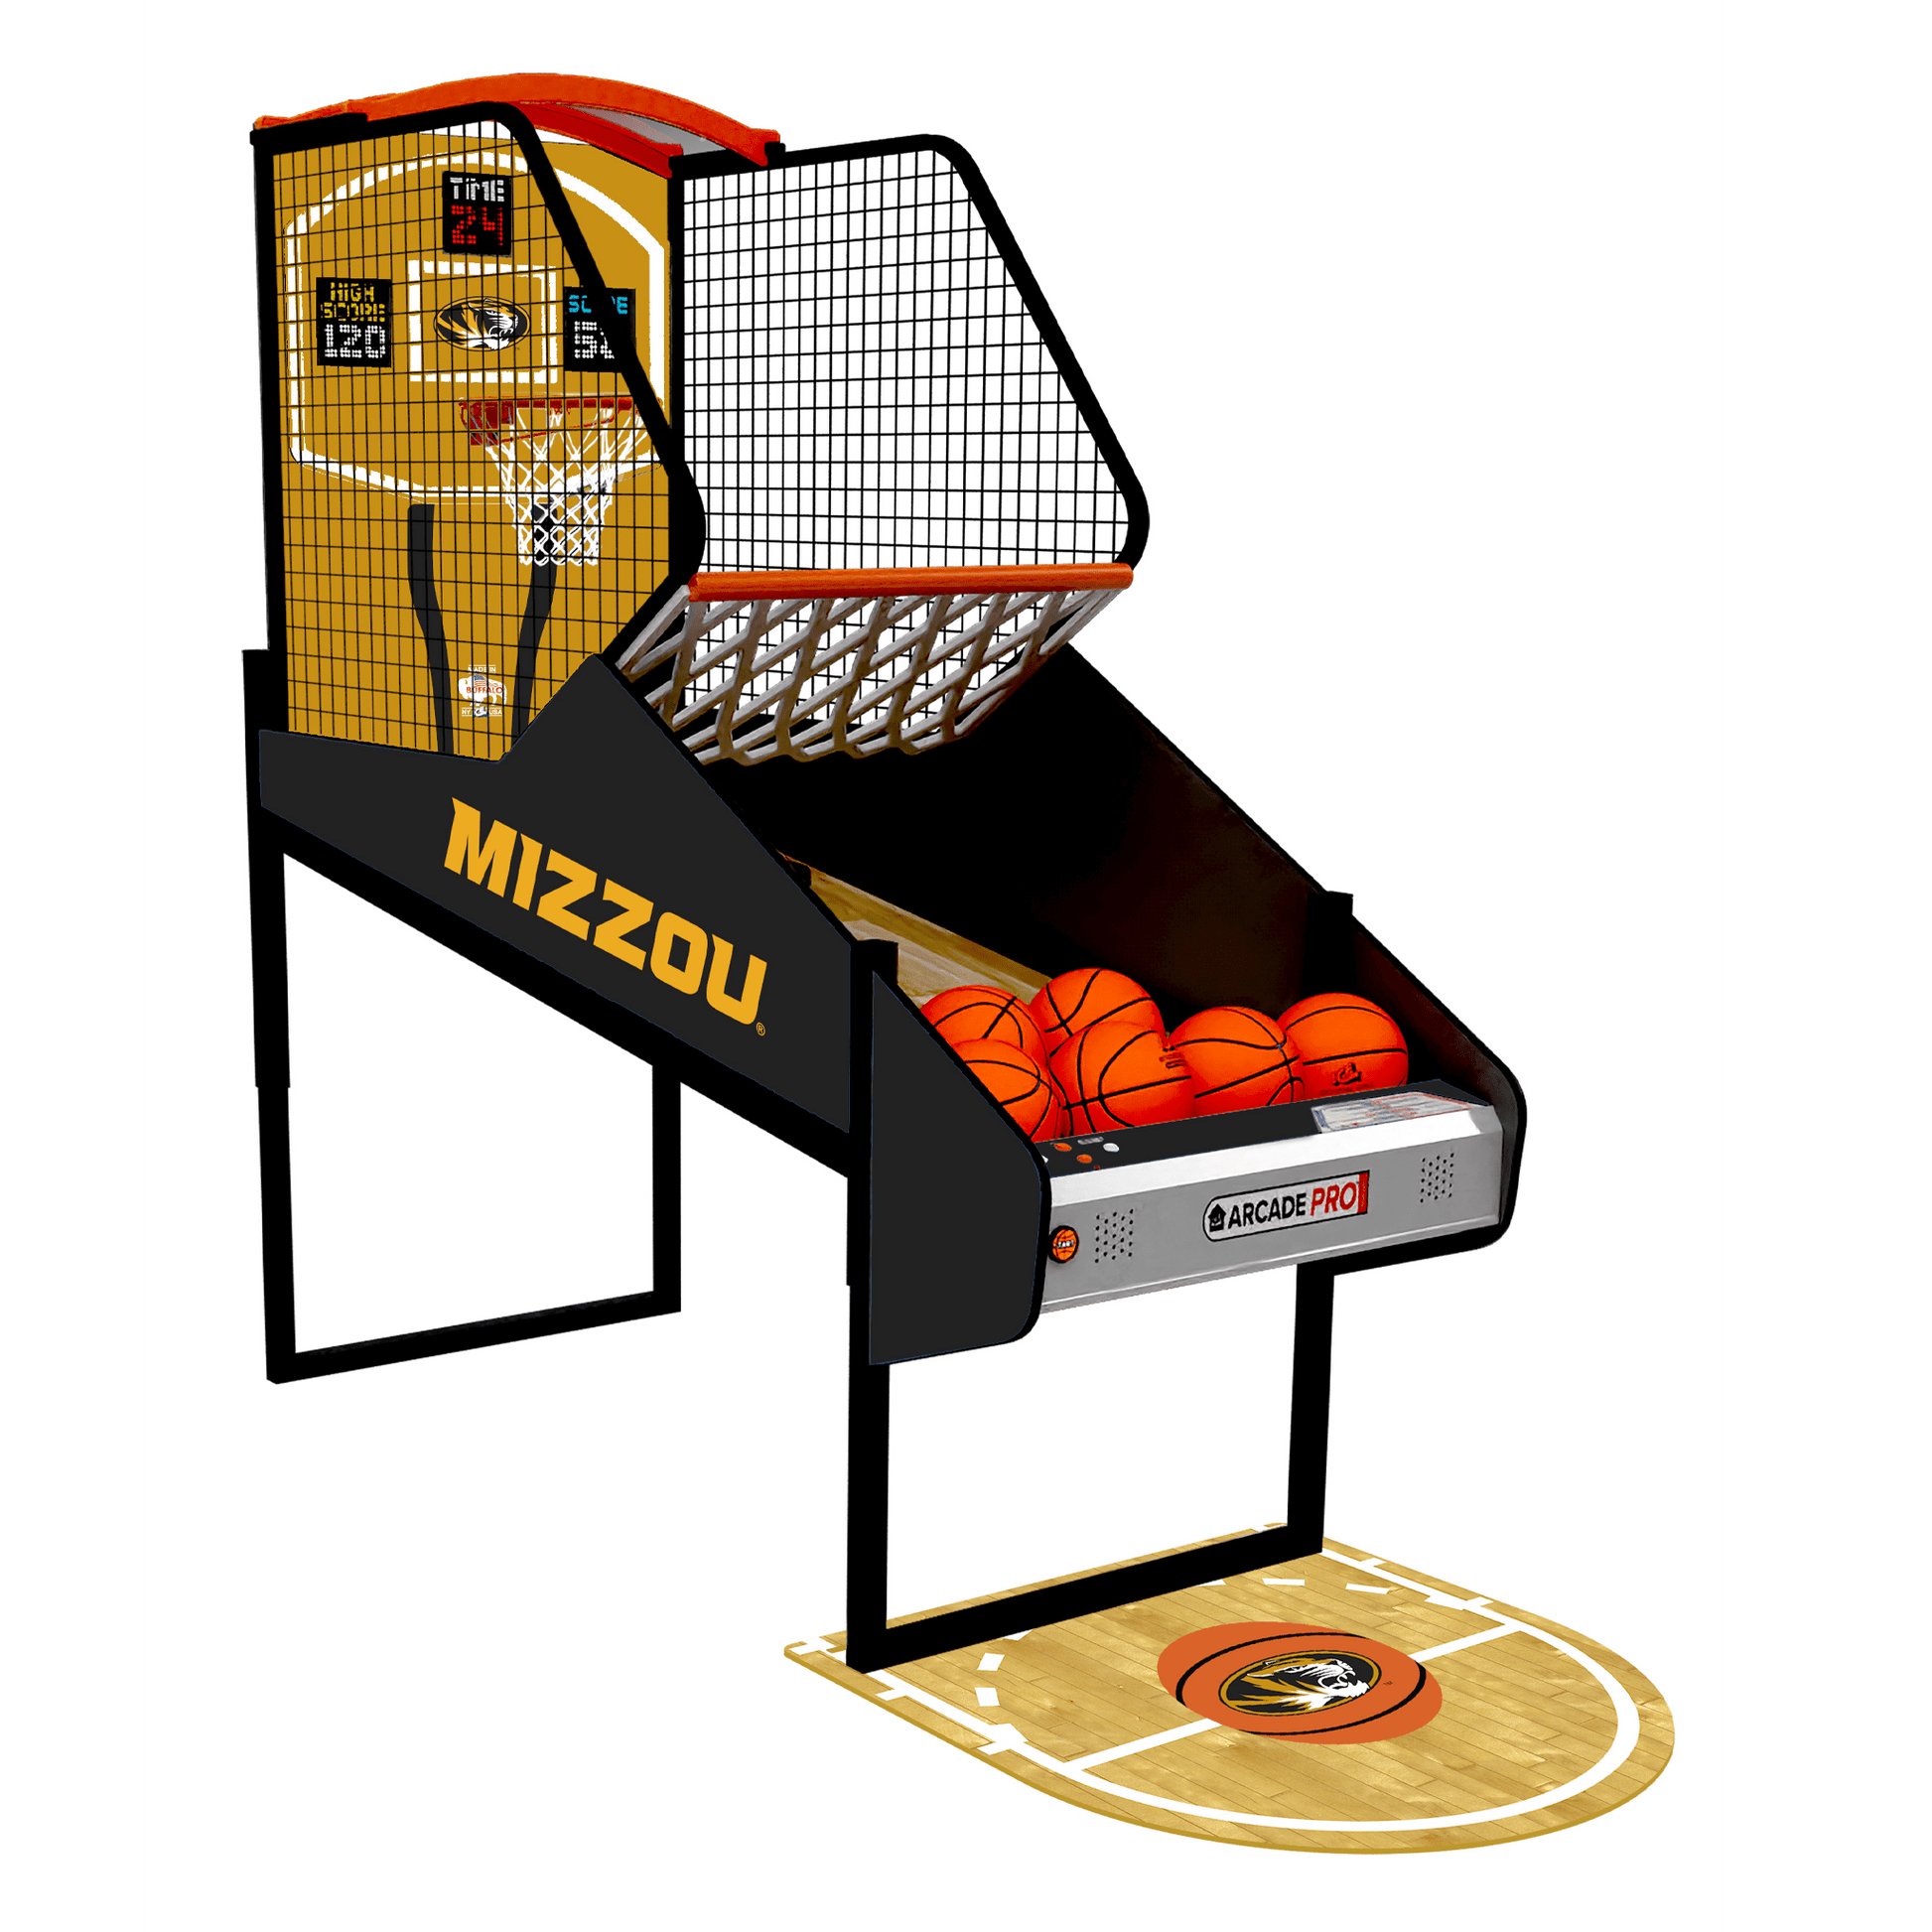 Missouri MIZZOU College Hoops Arcade Innovative Concepts in Entertainment   